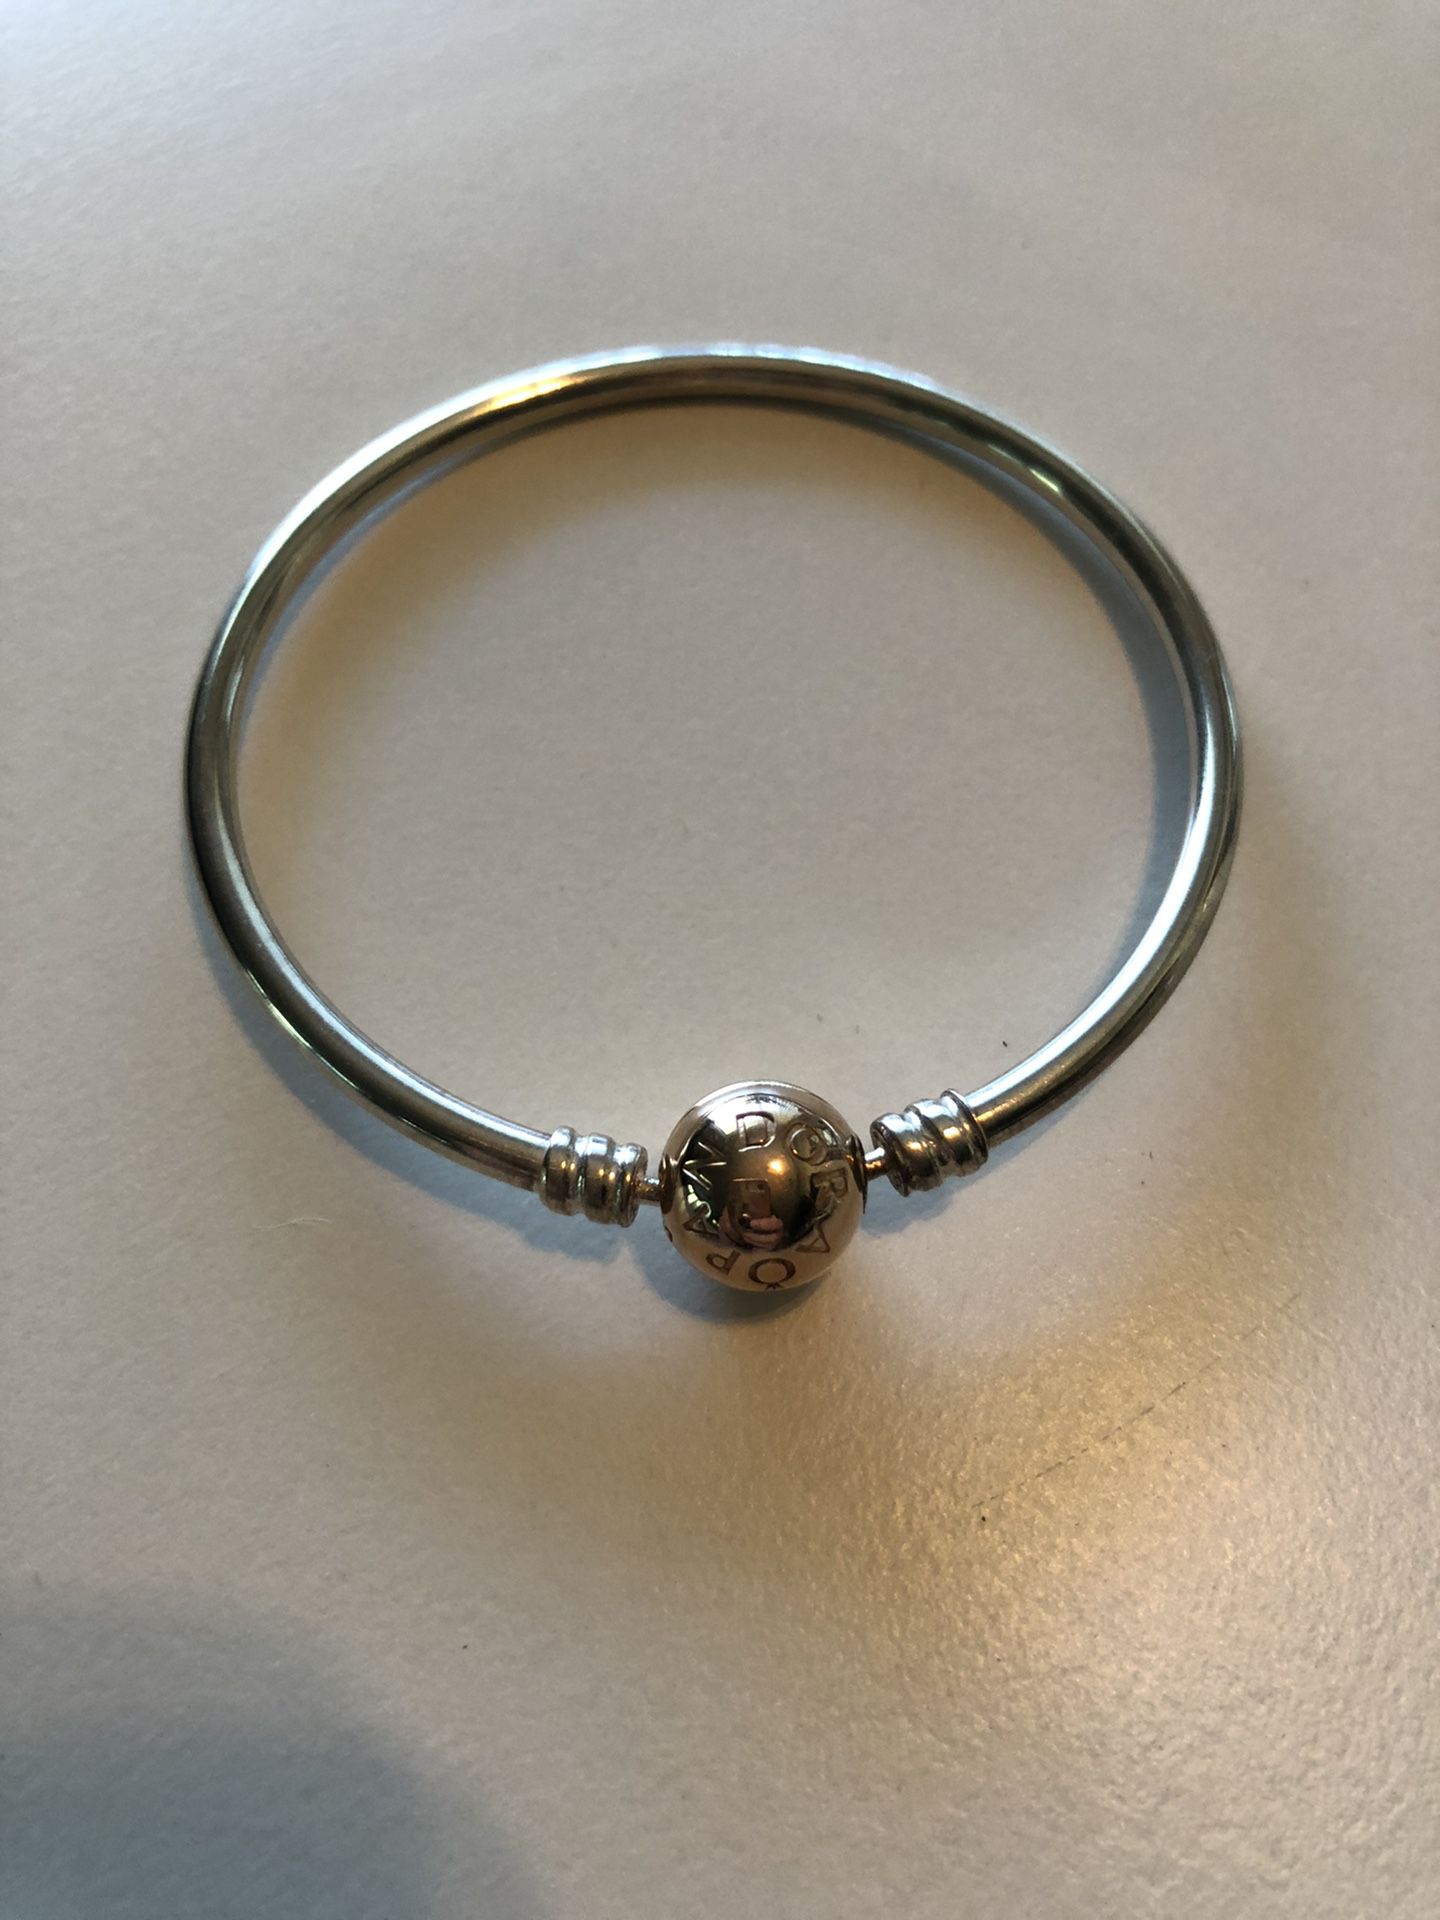 Authentic Pandora charm bracelet with rose gold signature clasp